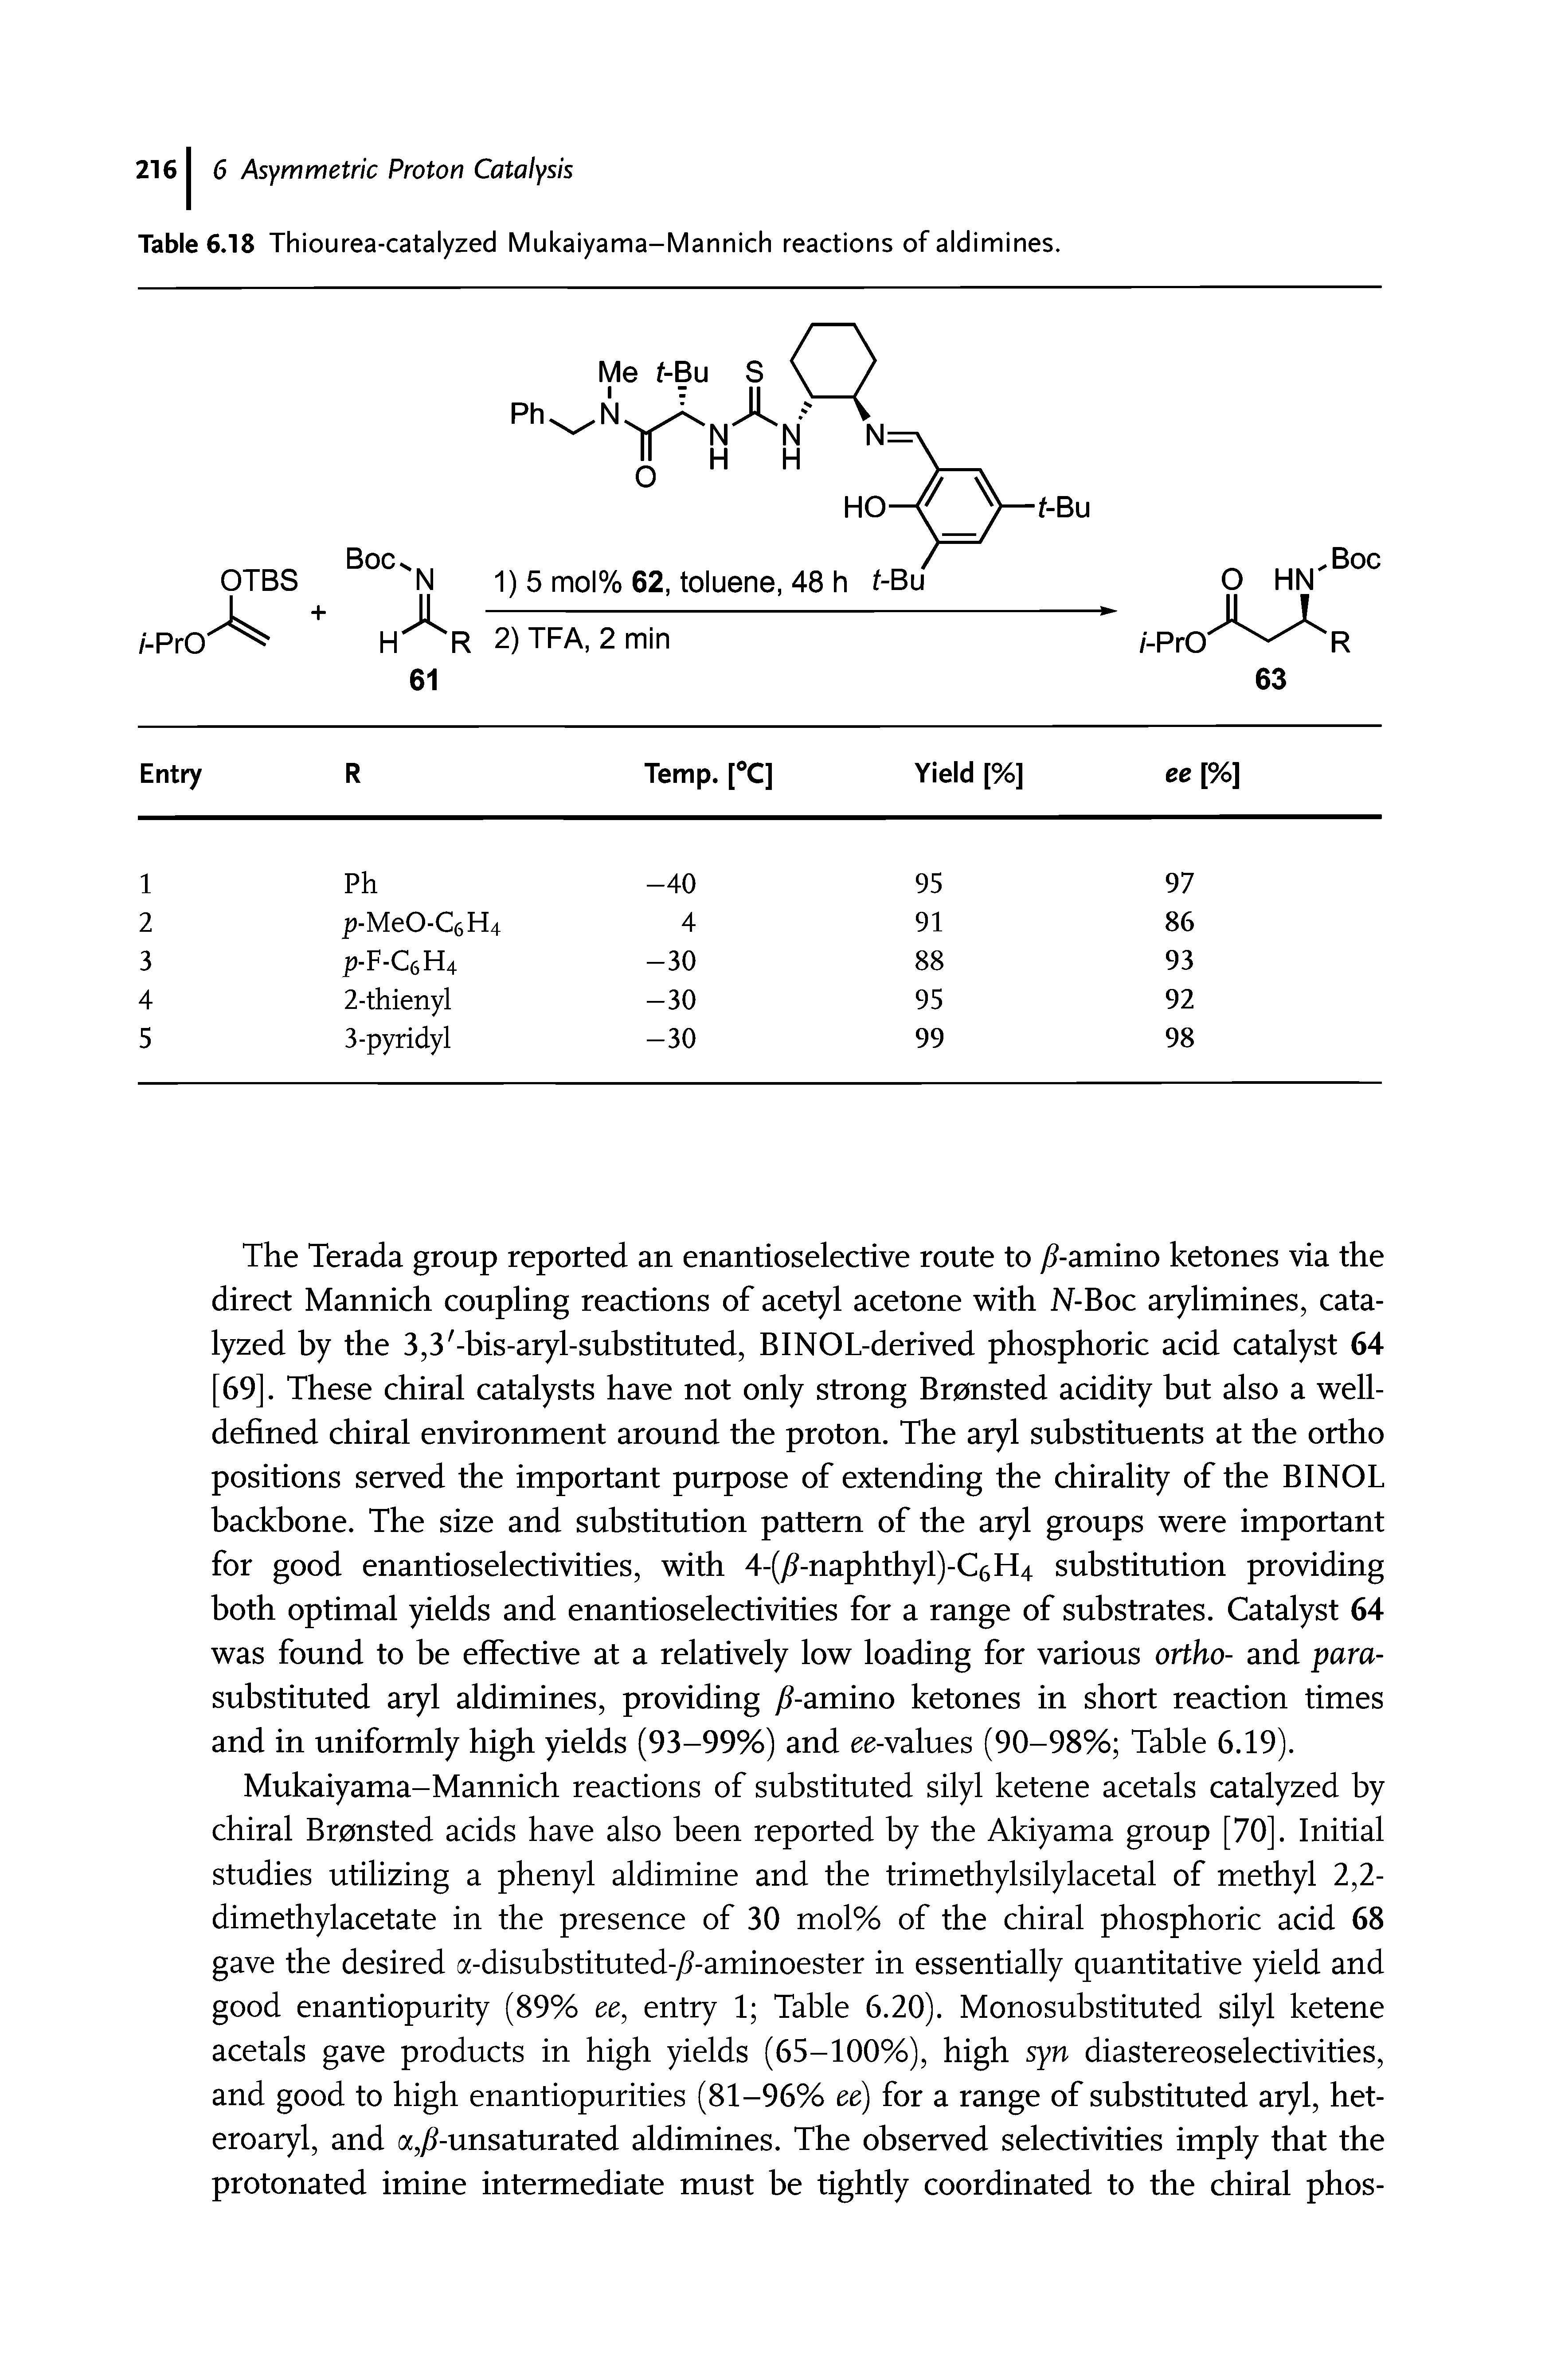 Table 6.18 Thiourea-catalyzed Mukaiyama-Mannich reactions of aldimines.